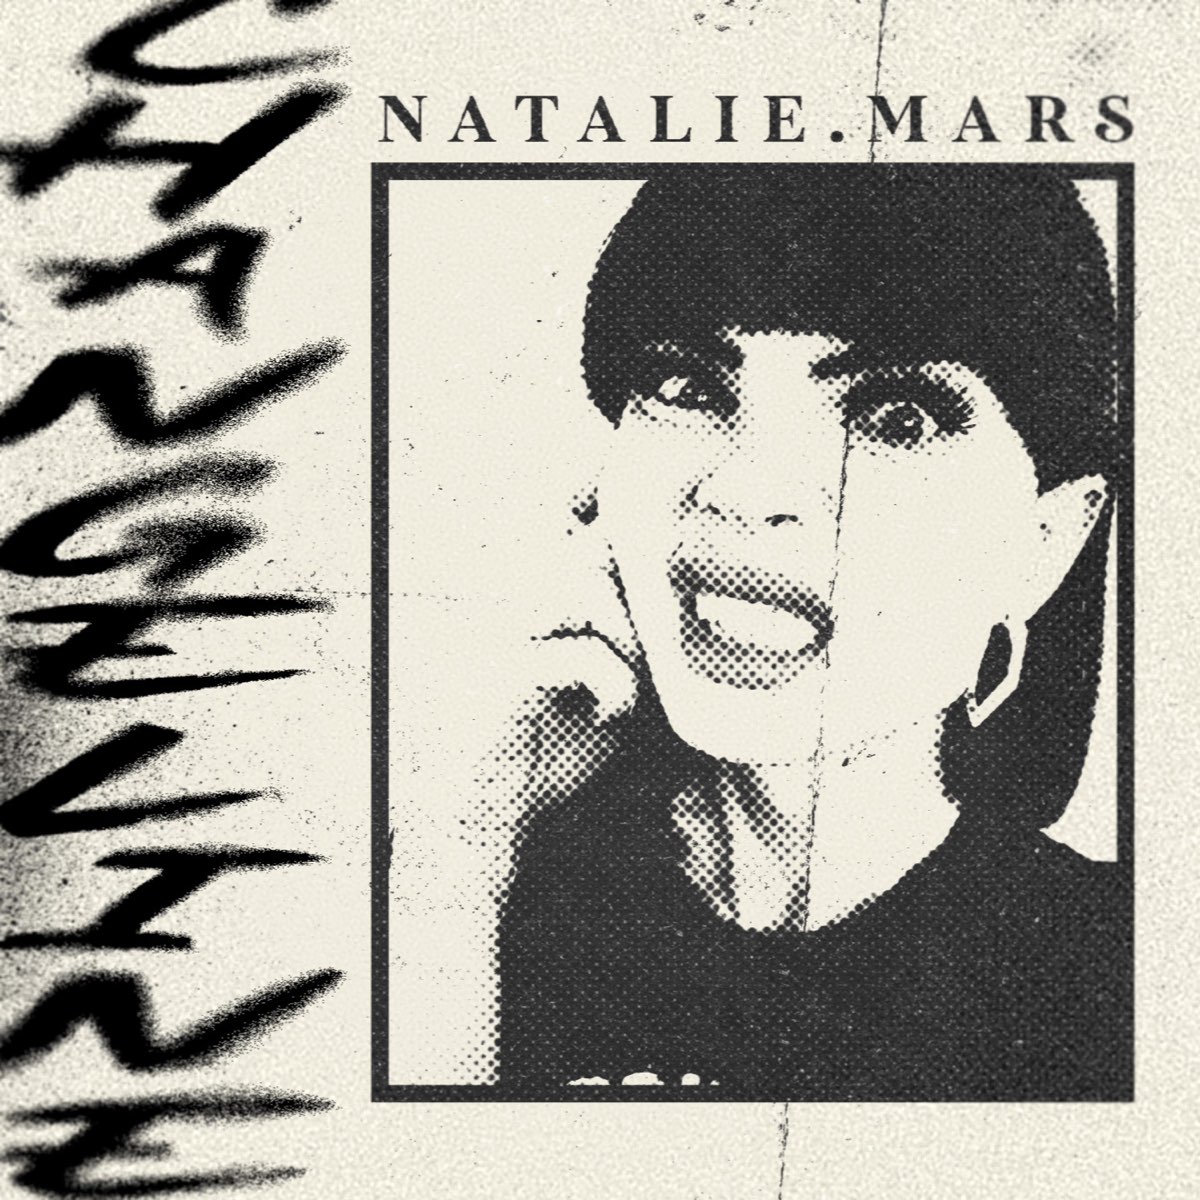 Natalie.Mars - Single by Changeline on Apple Music